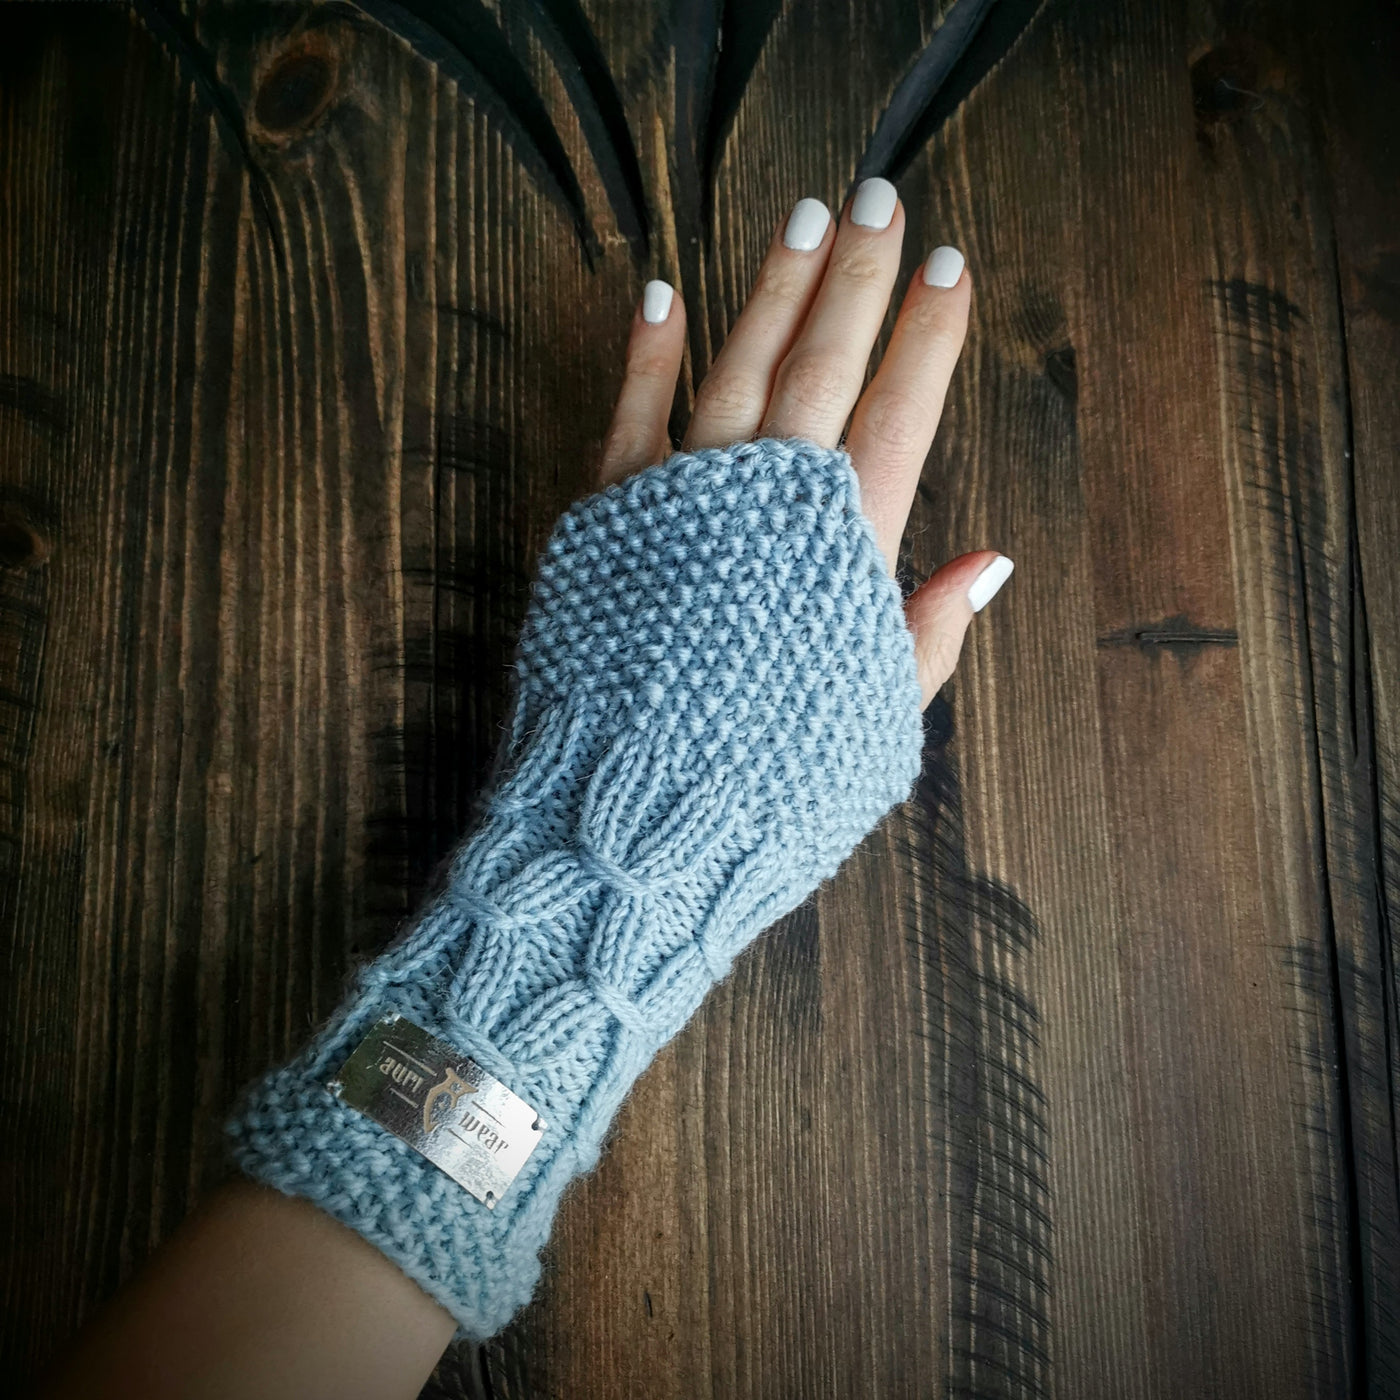 Handmade knitted winter blue wrist warmers